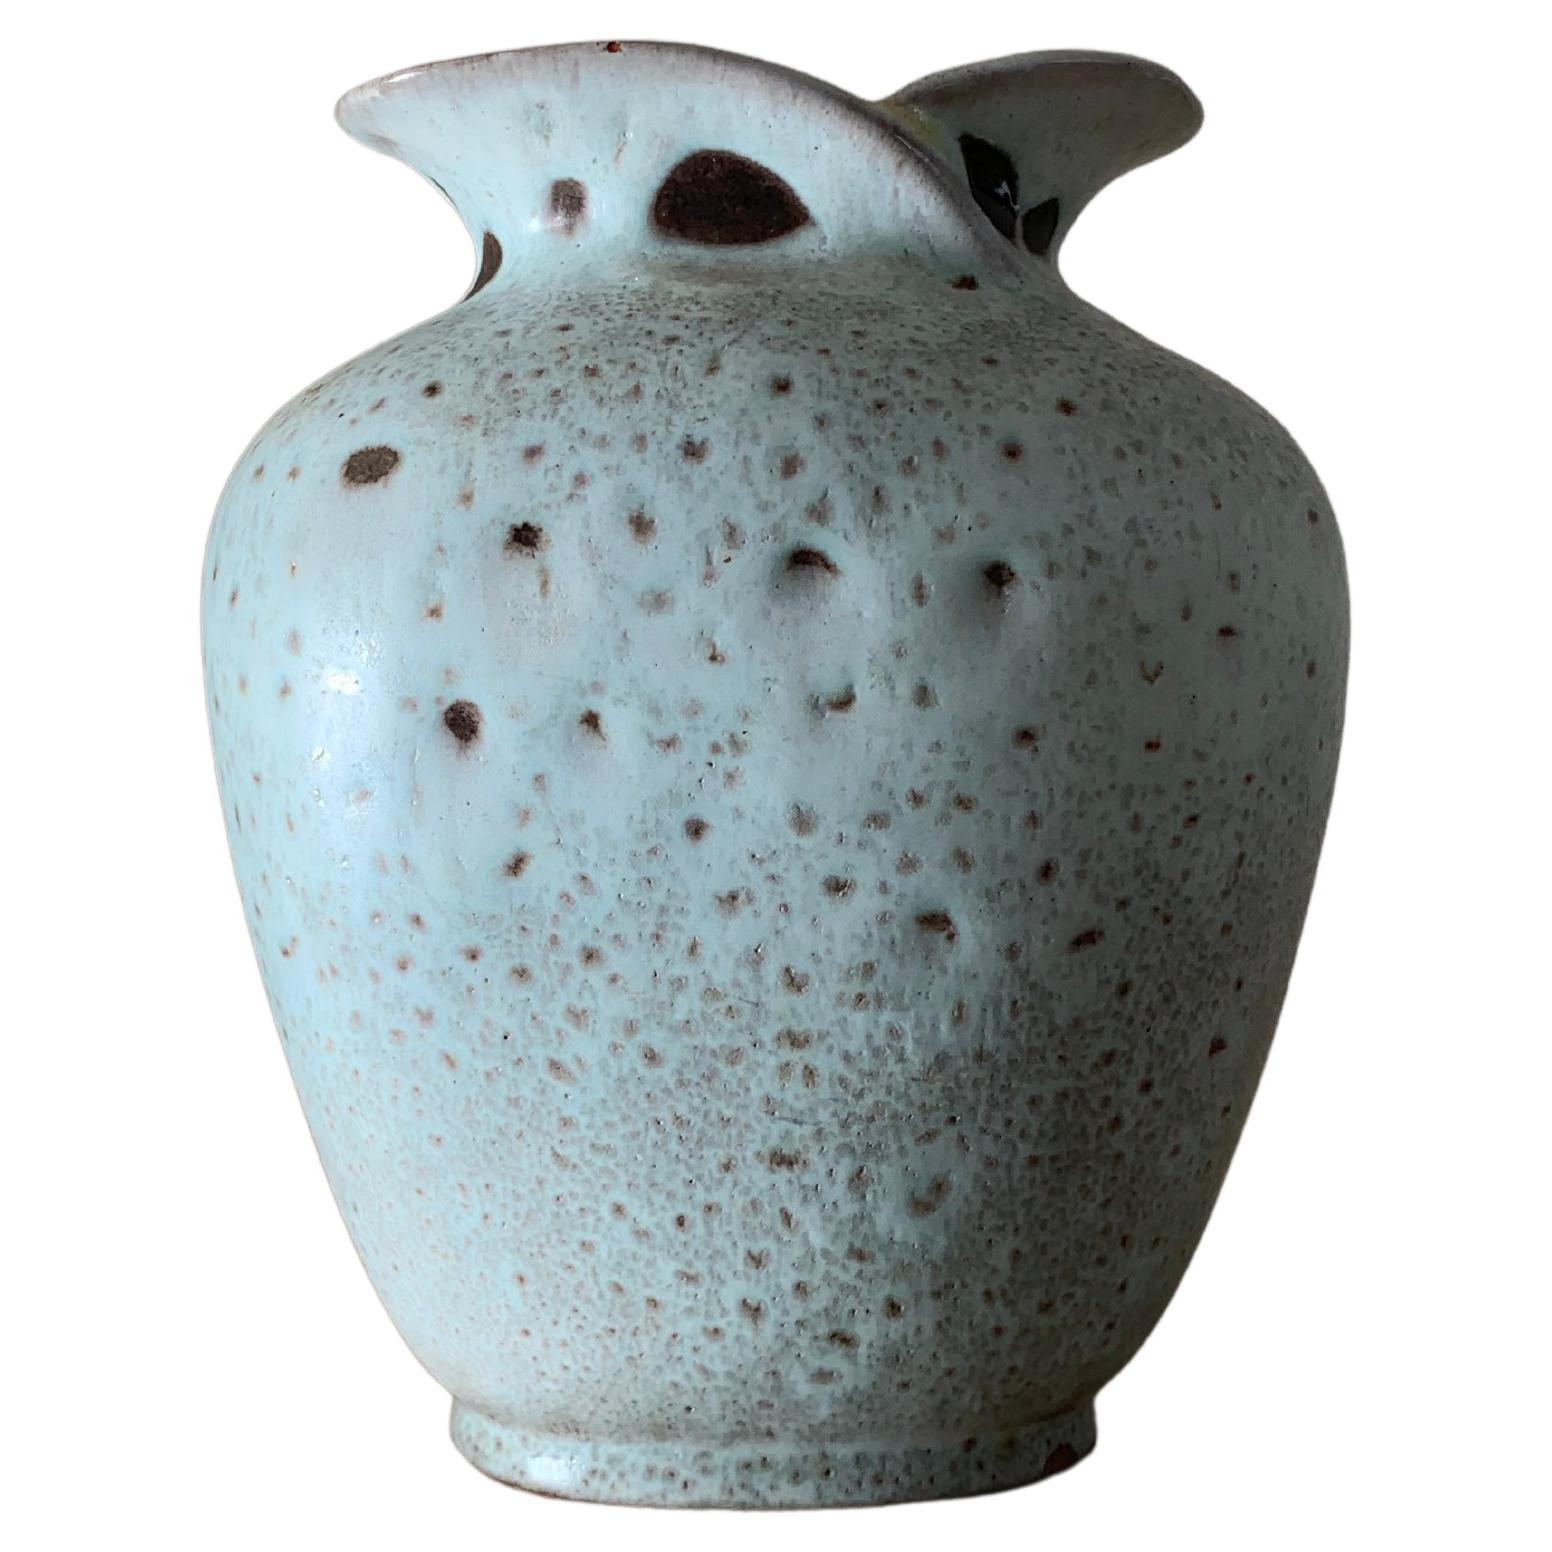 Carstens Tönnieshof Pockmarked Ceramic Vase from West Germany, circa 1950s